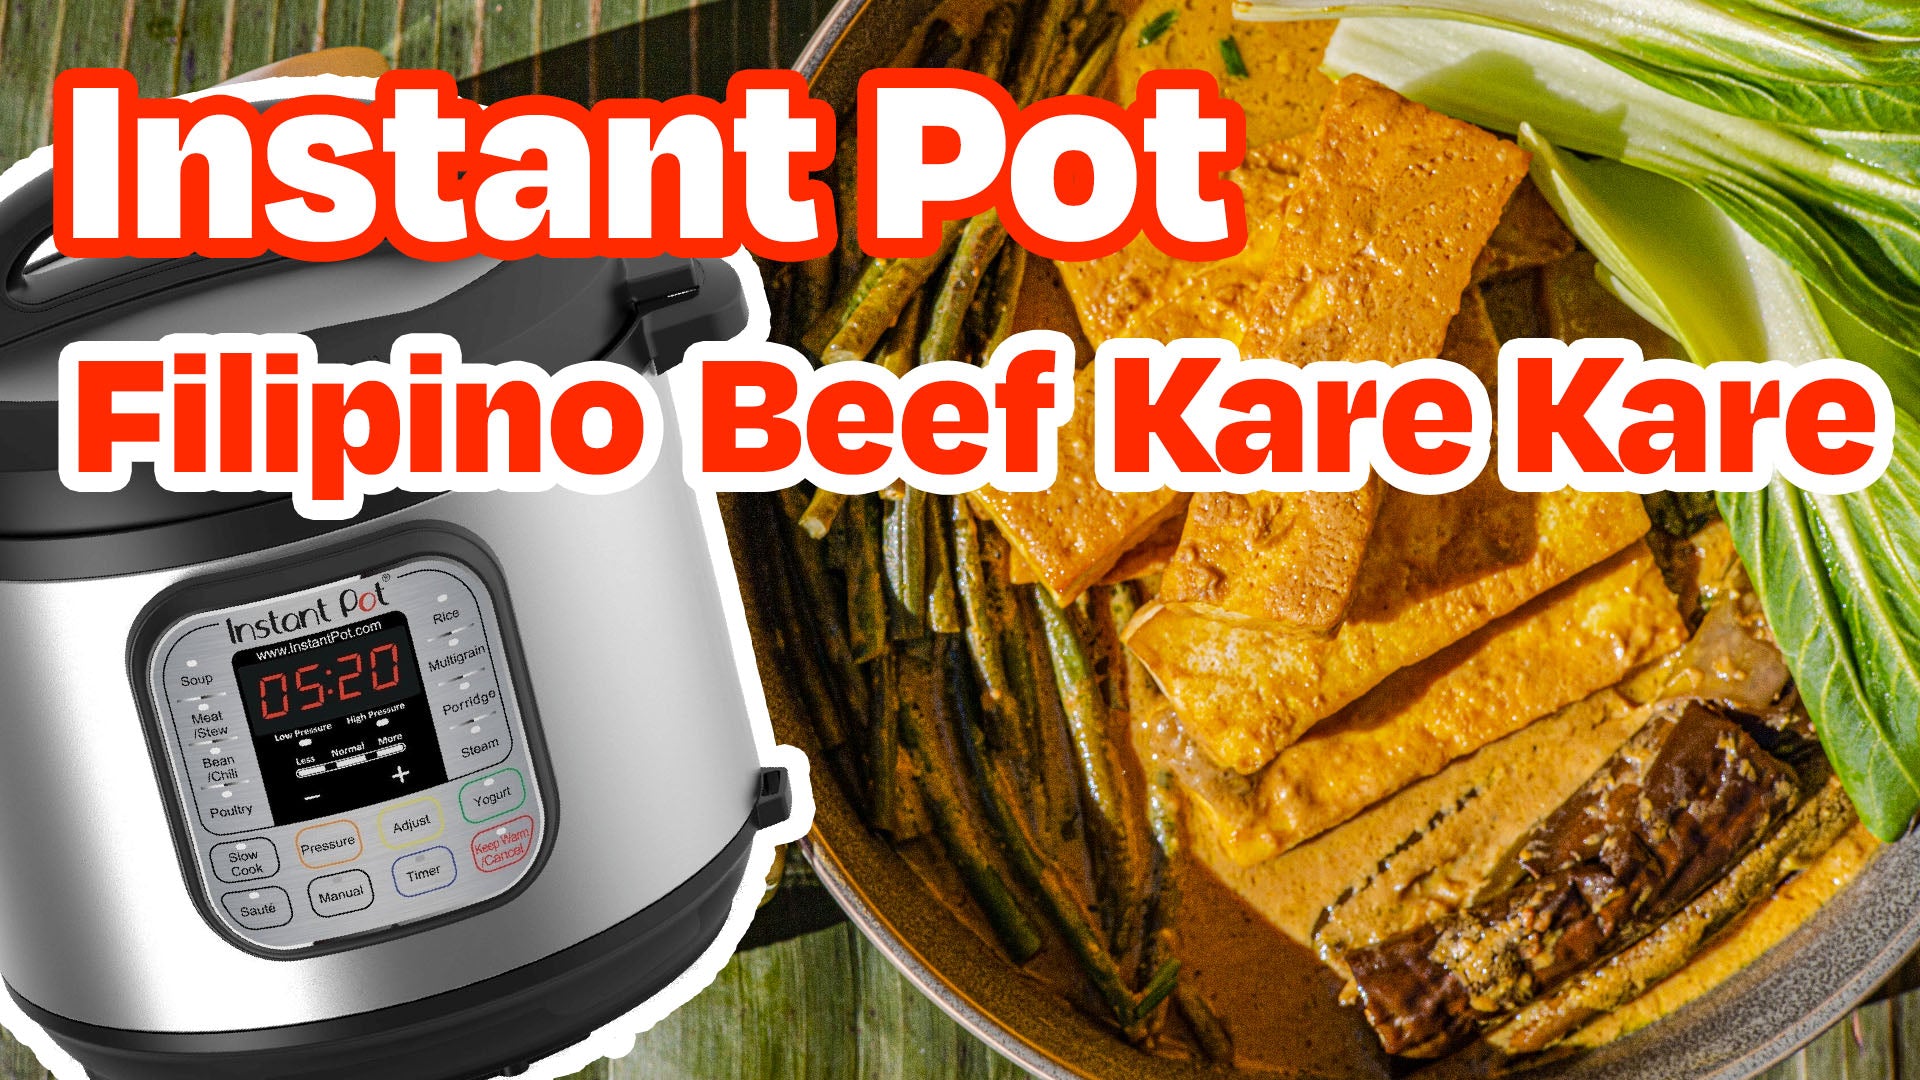 Recipe: Instant Pot Filipino Beef Kare Kare by Fila Manila